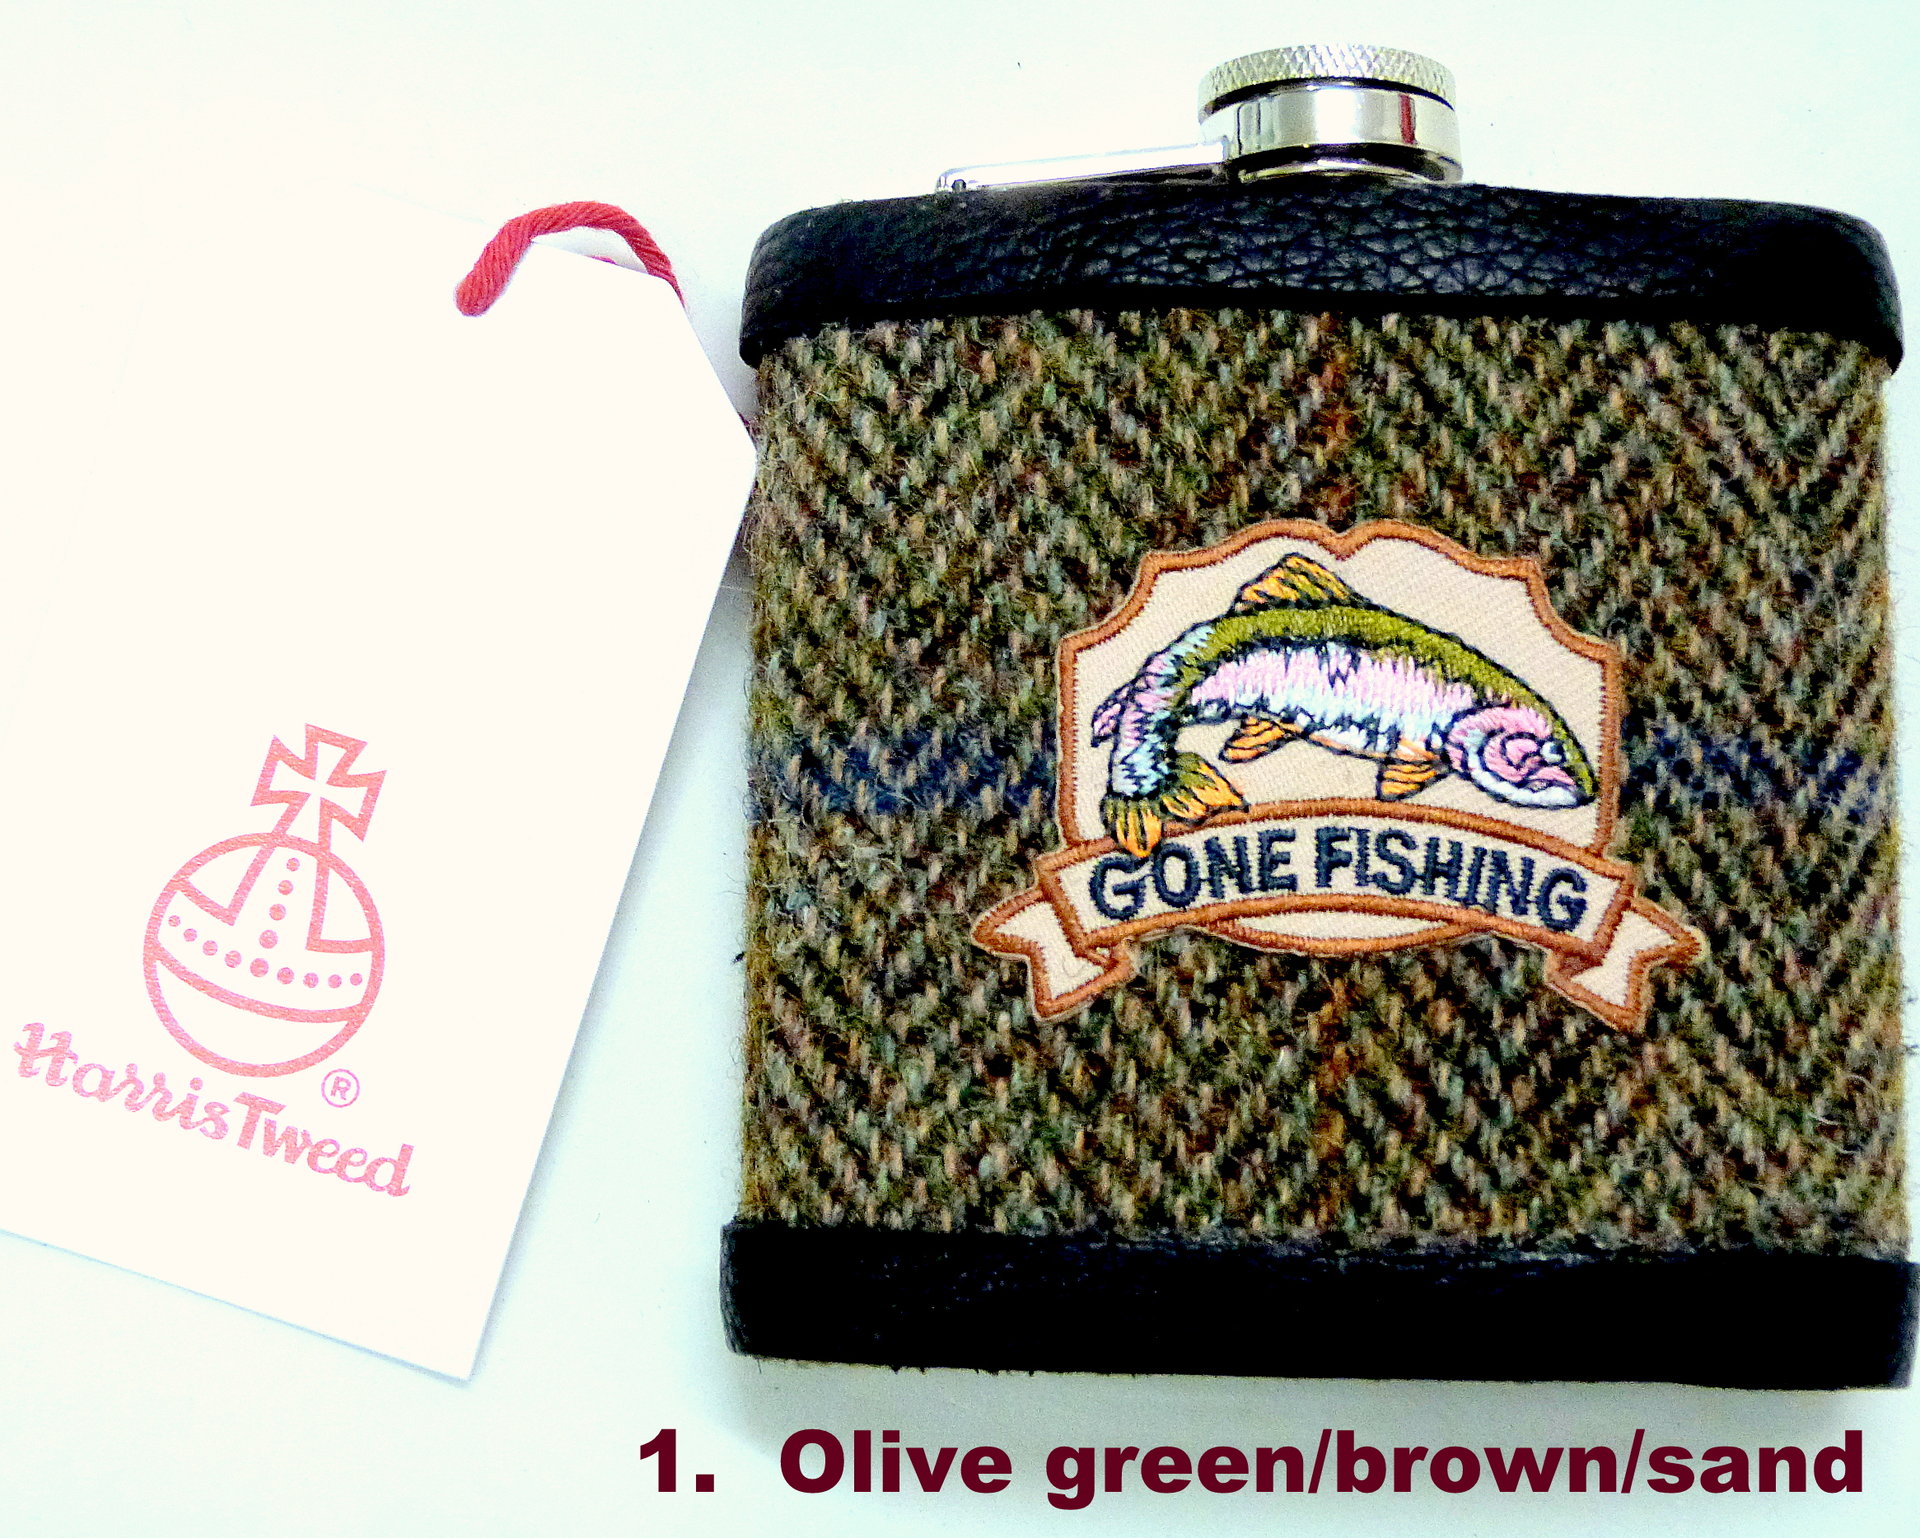 gone fishing-flask-harris tweed-fishermans gift-gift for him-mens gift